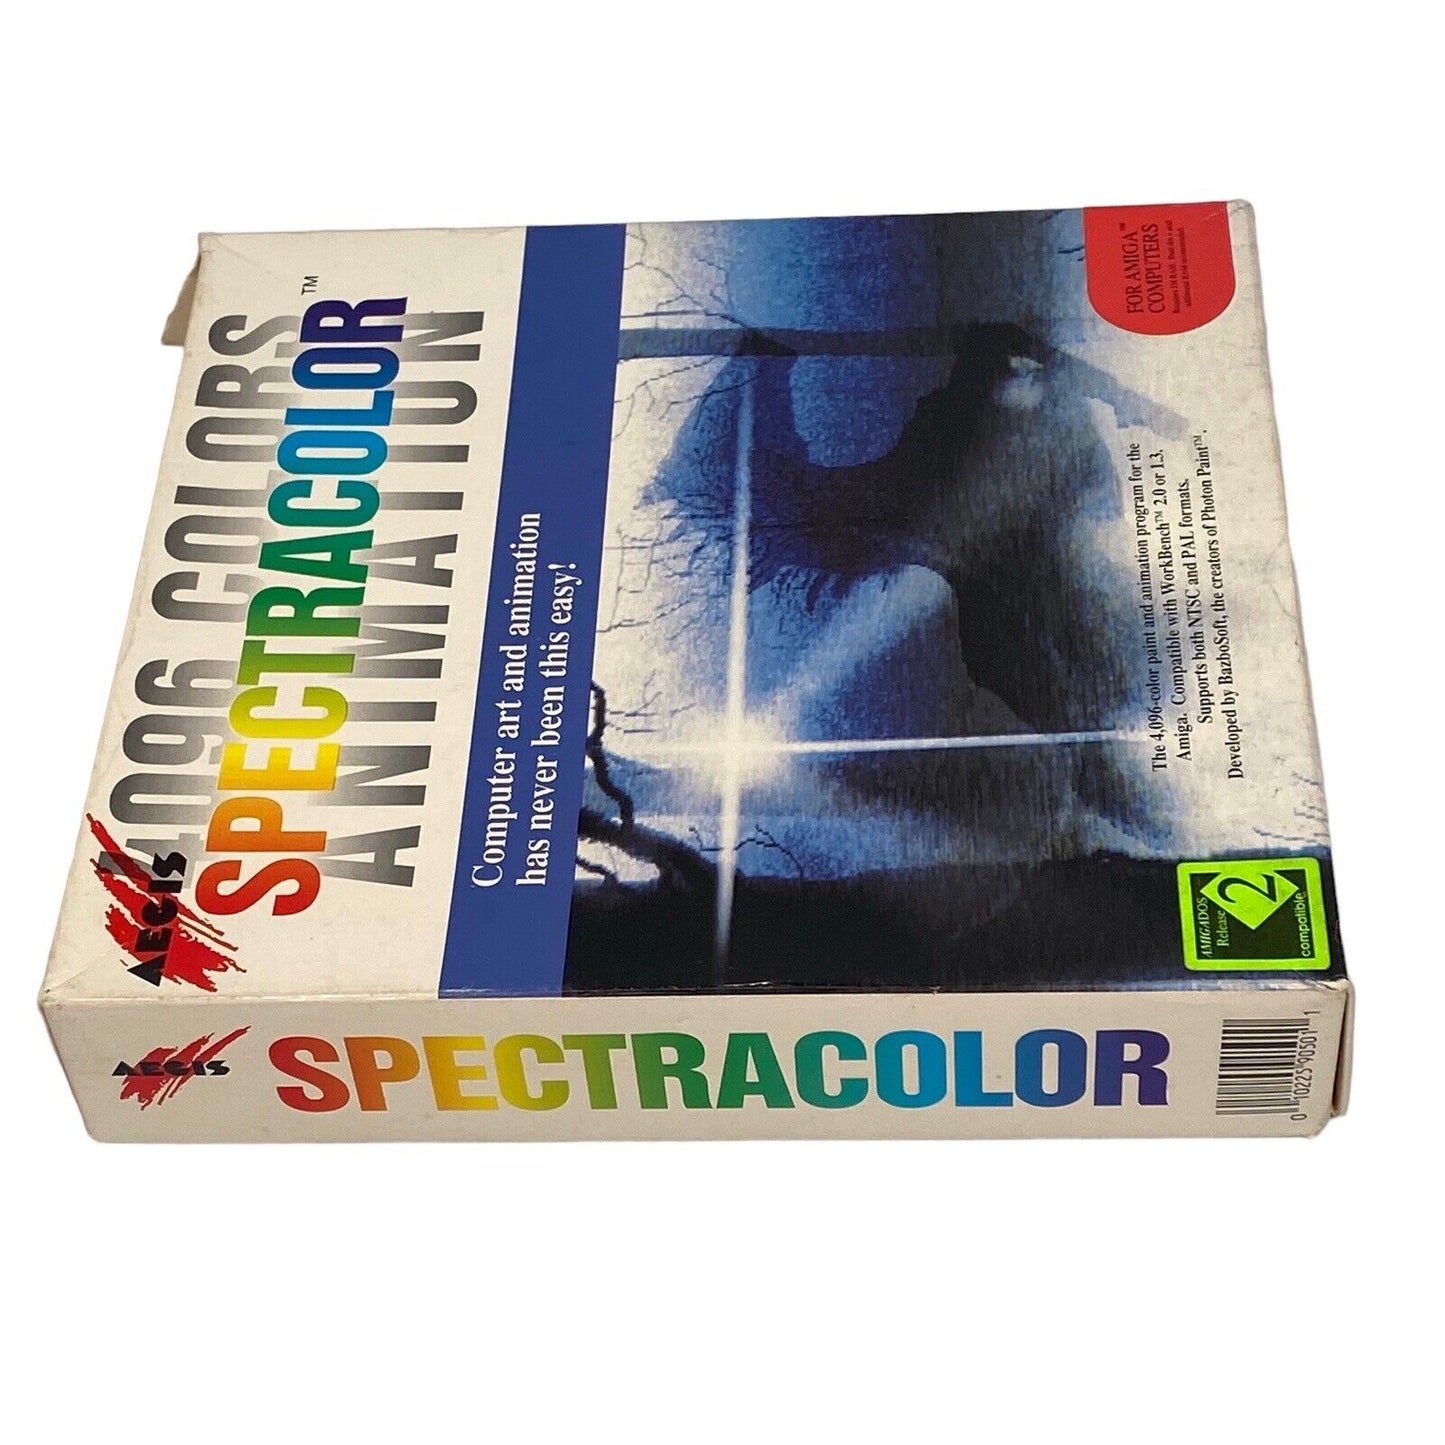 Aegis SpectraColor 4096 Colors VTG Animation Software 1984 Commodore 64 CIB